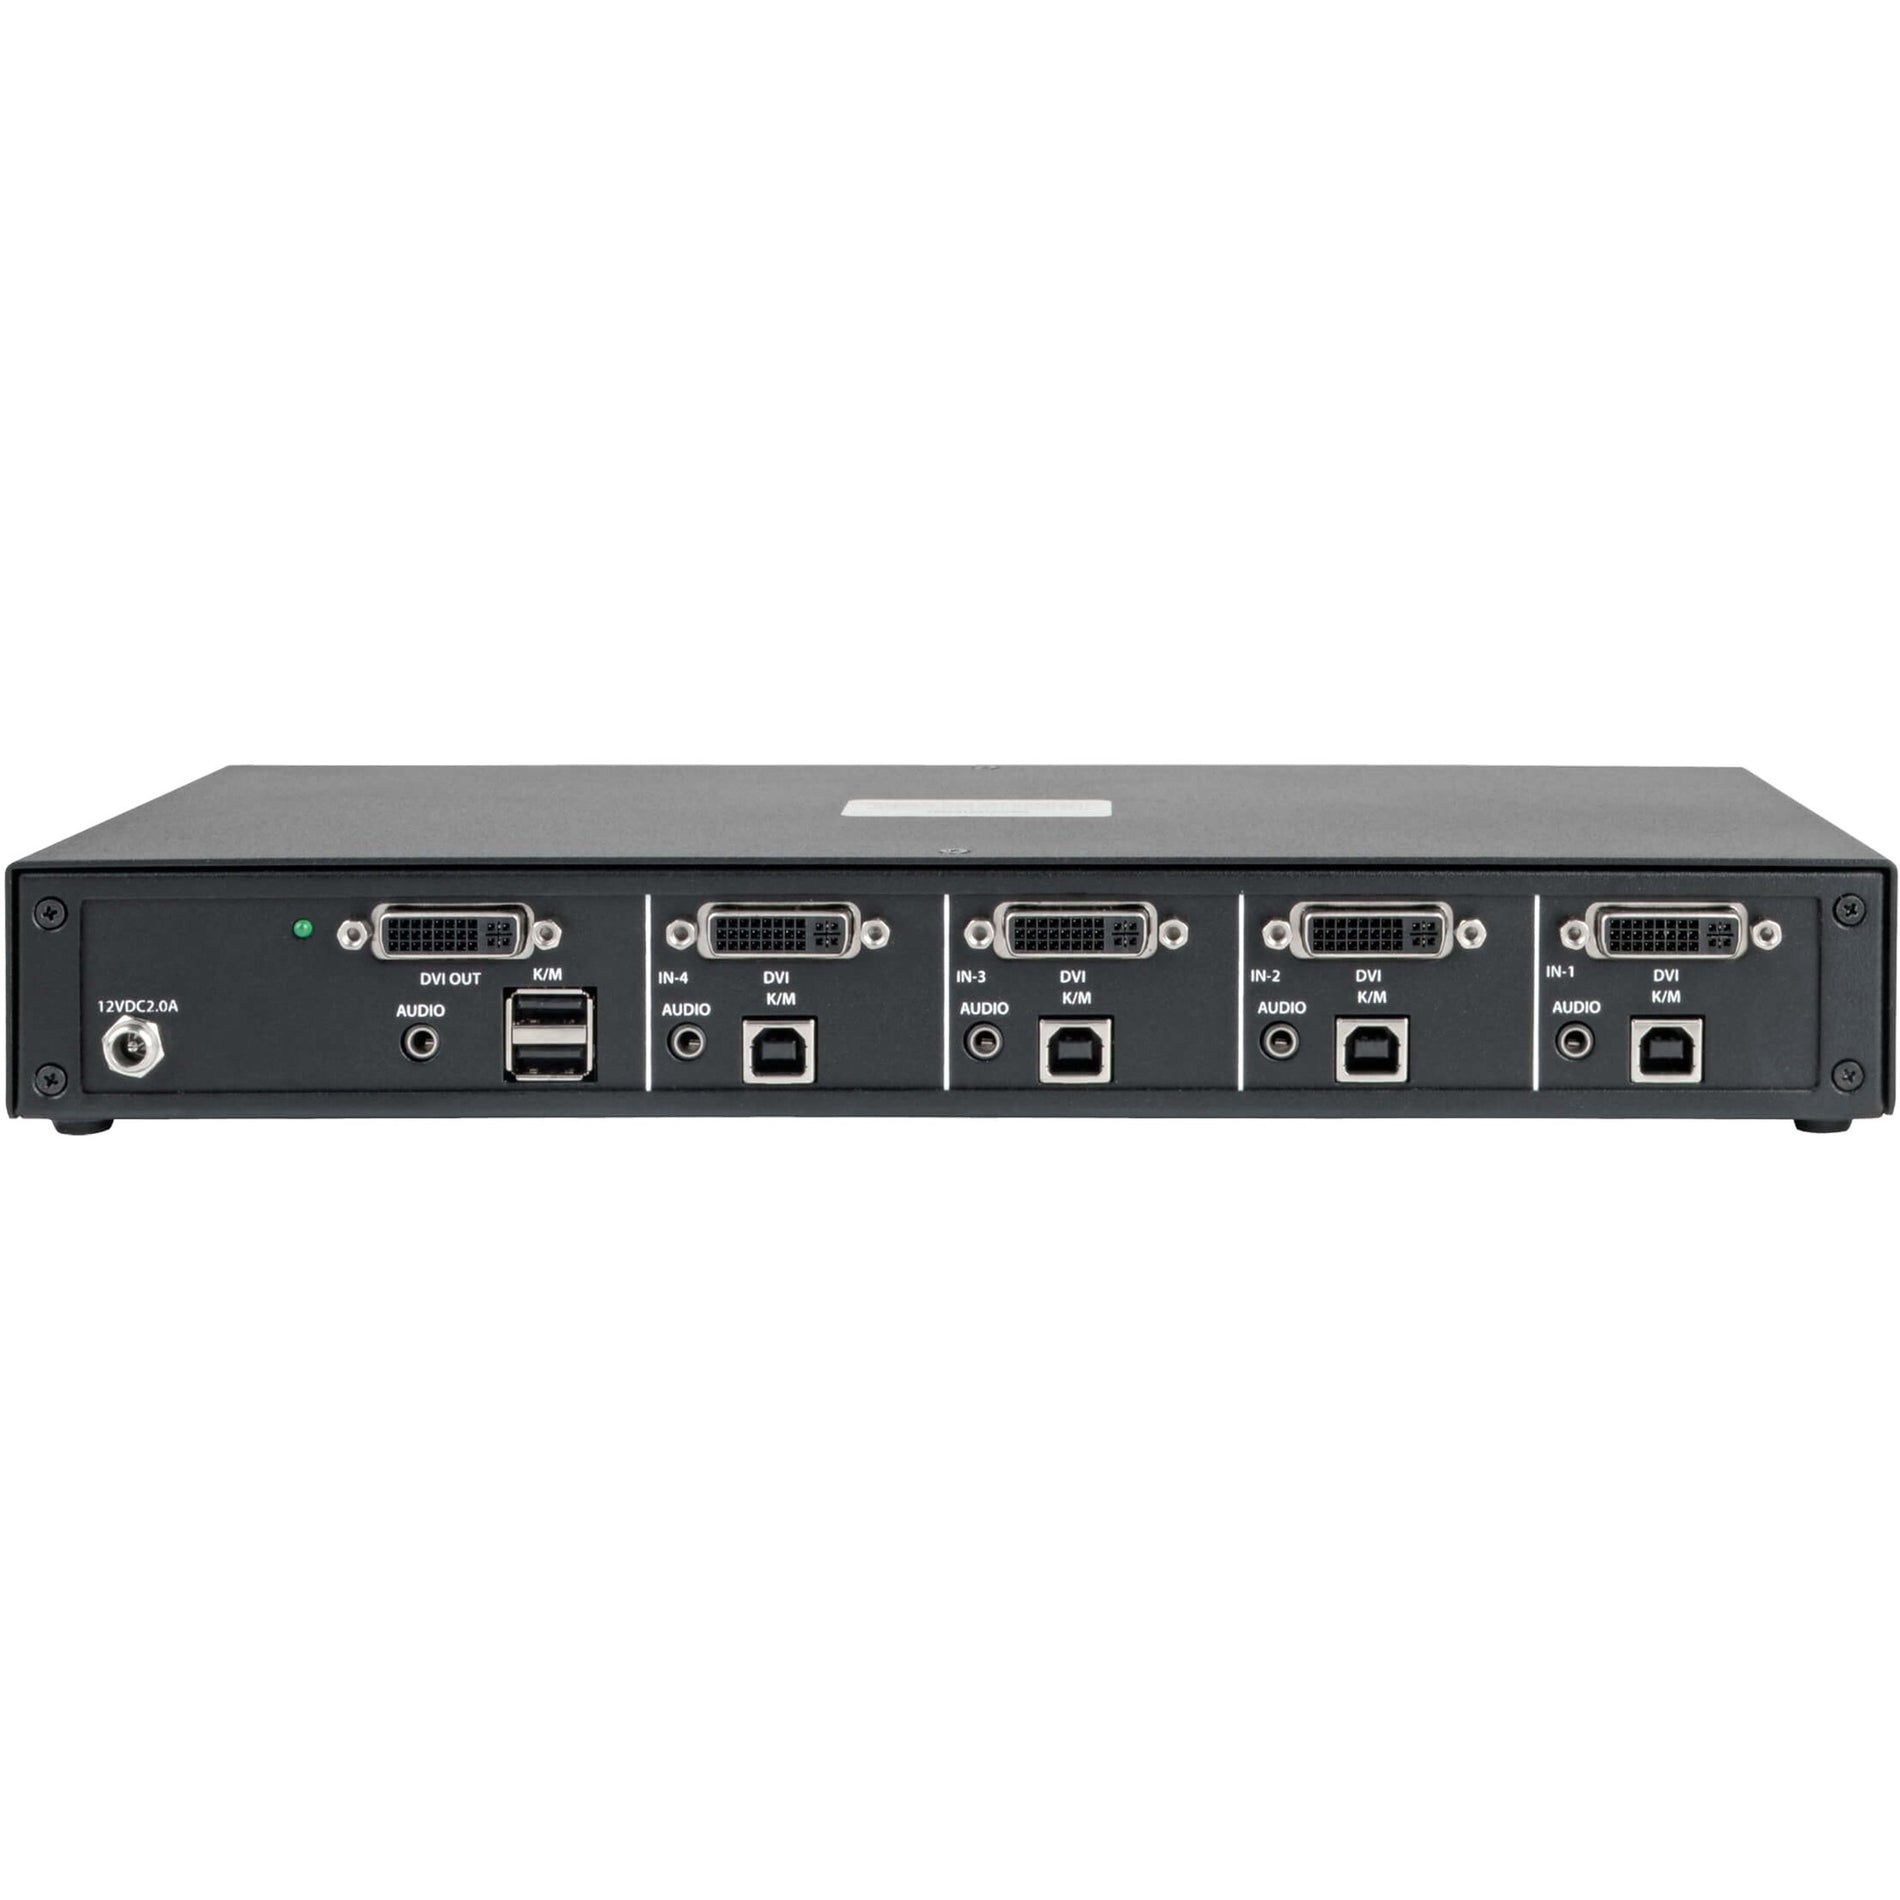 Tripp Lite B002-DV1A4 4-Port NIAP PP3.0-Certified DVI-I KVM Switch Maximale Videoauflösung 2560 x 1600 3 Jahre Garantie